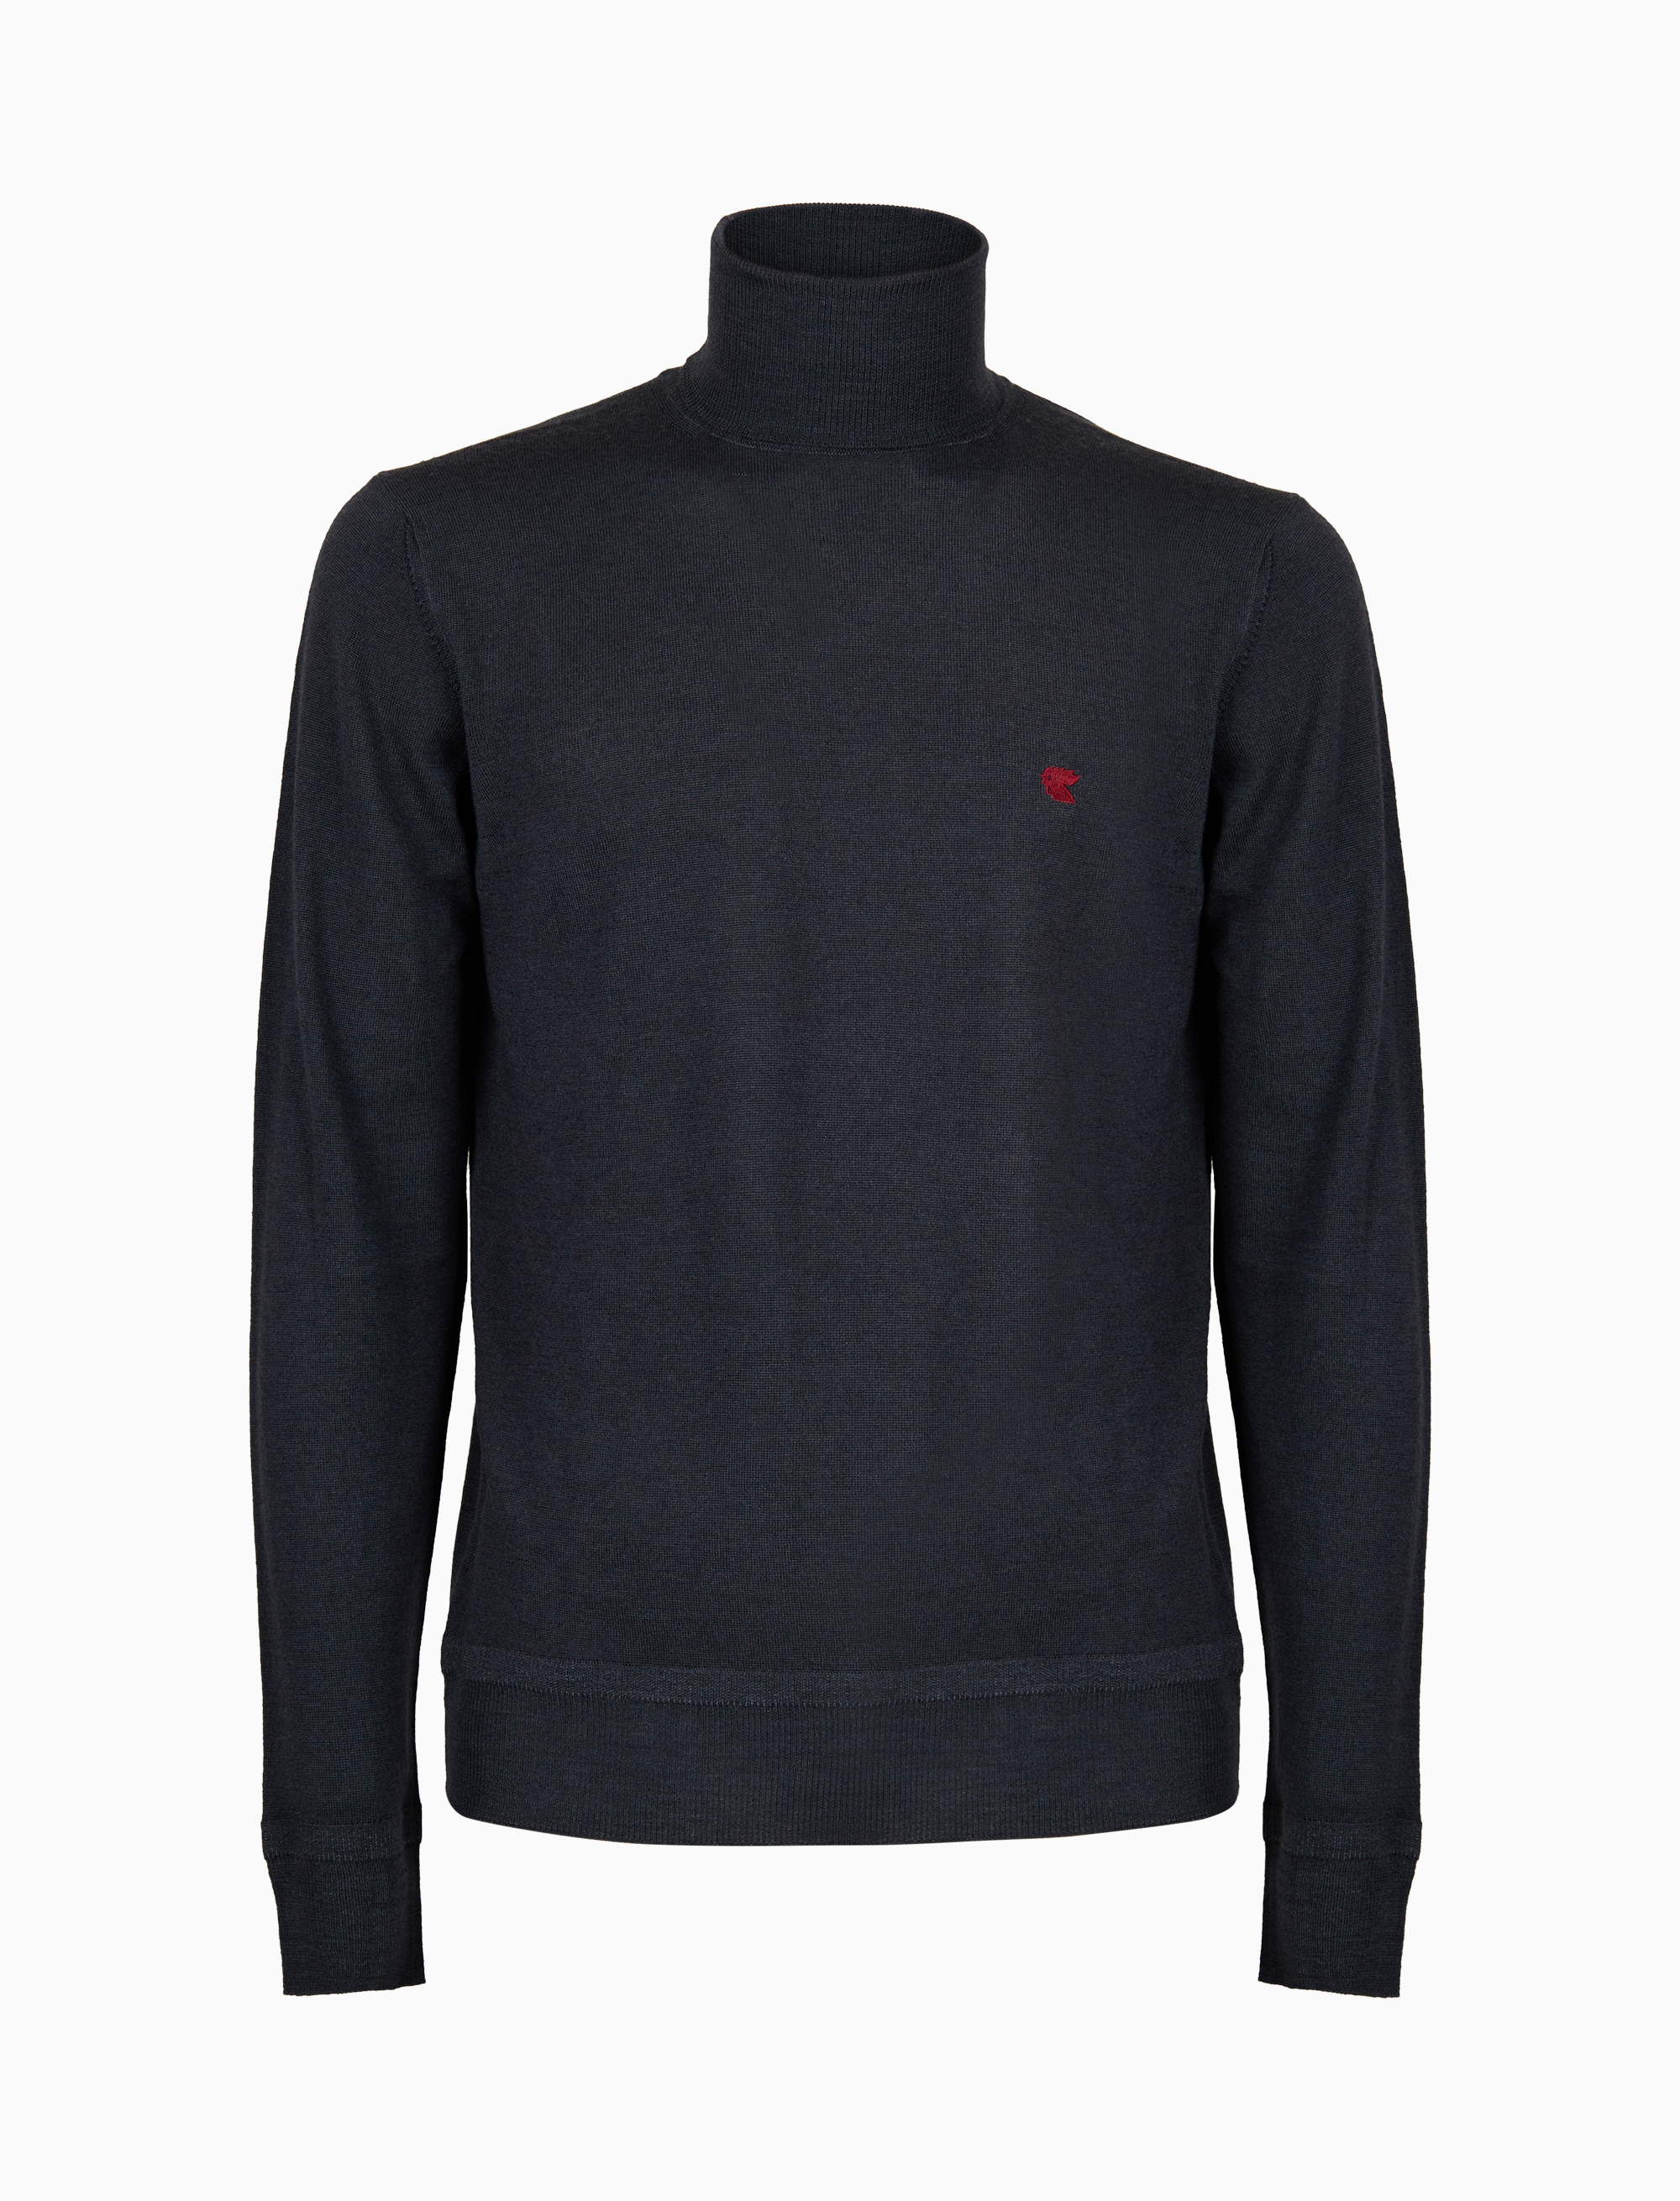 Men's plain grey wool turtleneck sweater | Gallo